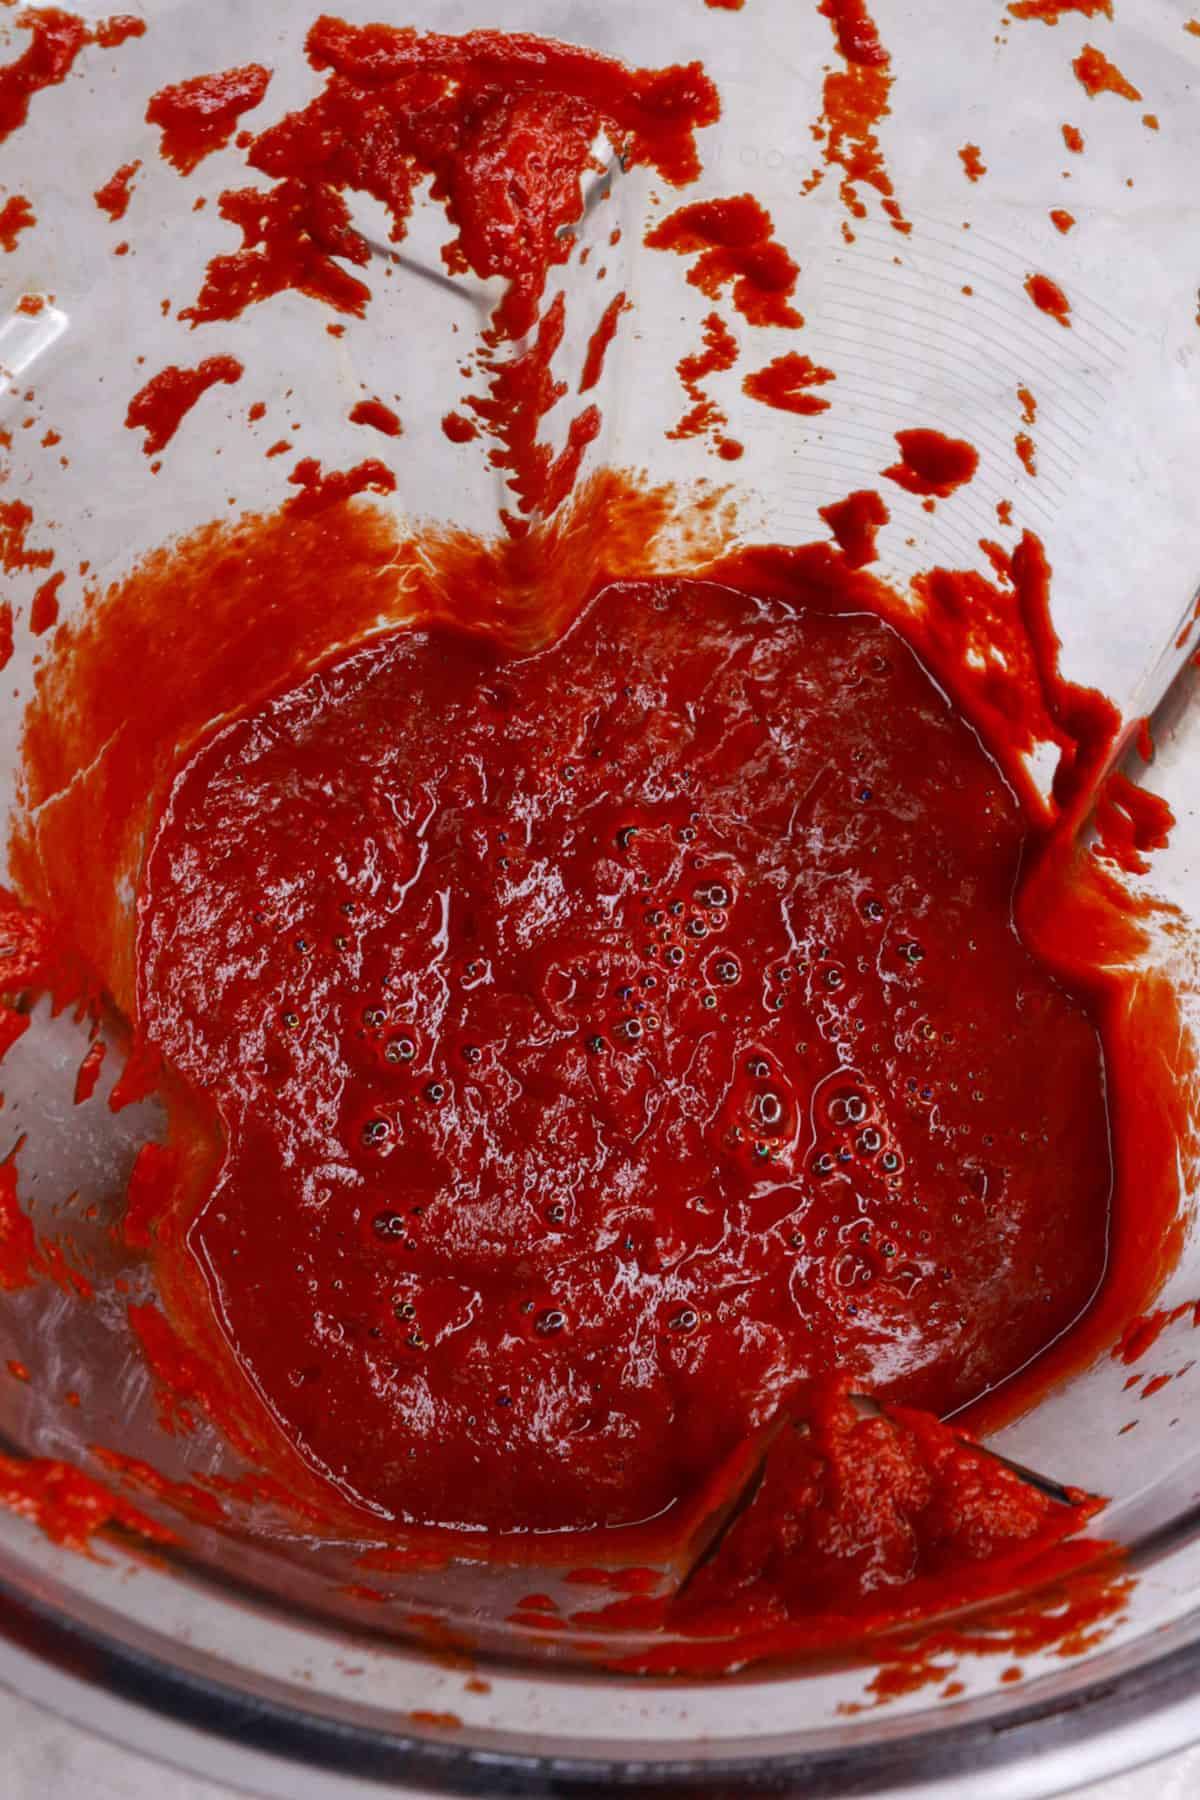 Red sauce blended for asado de puerco